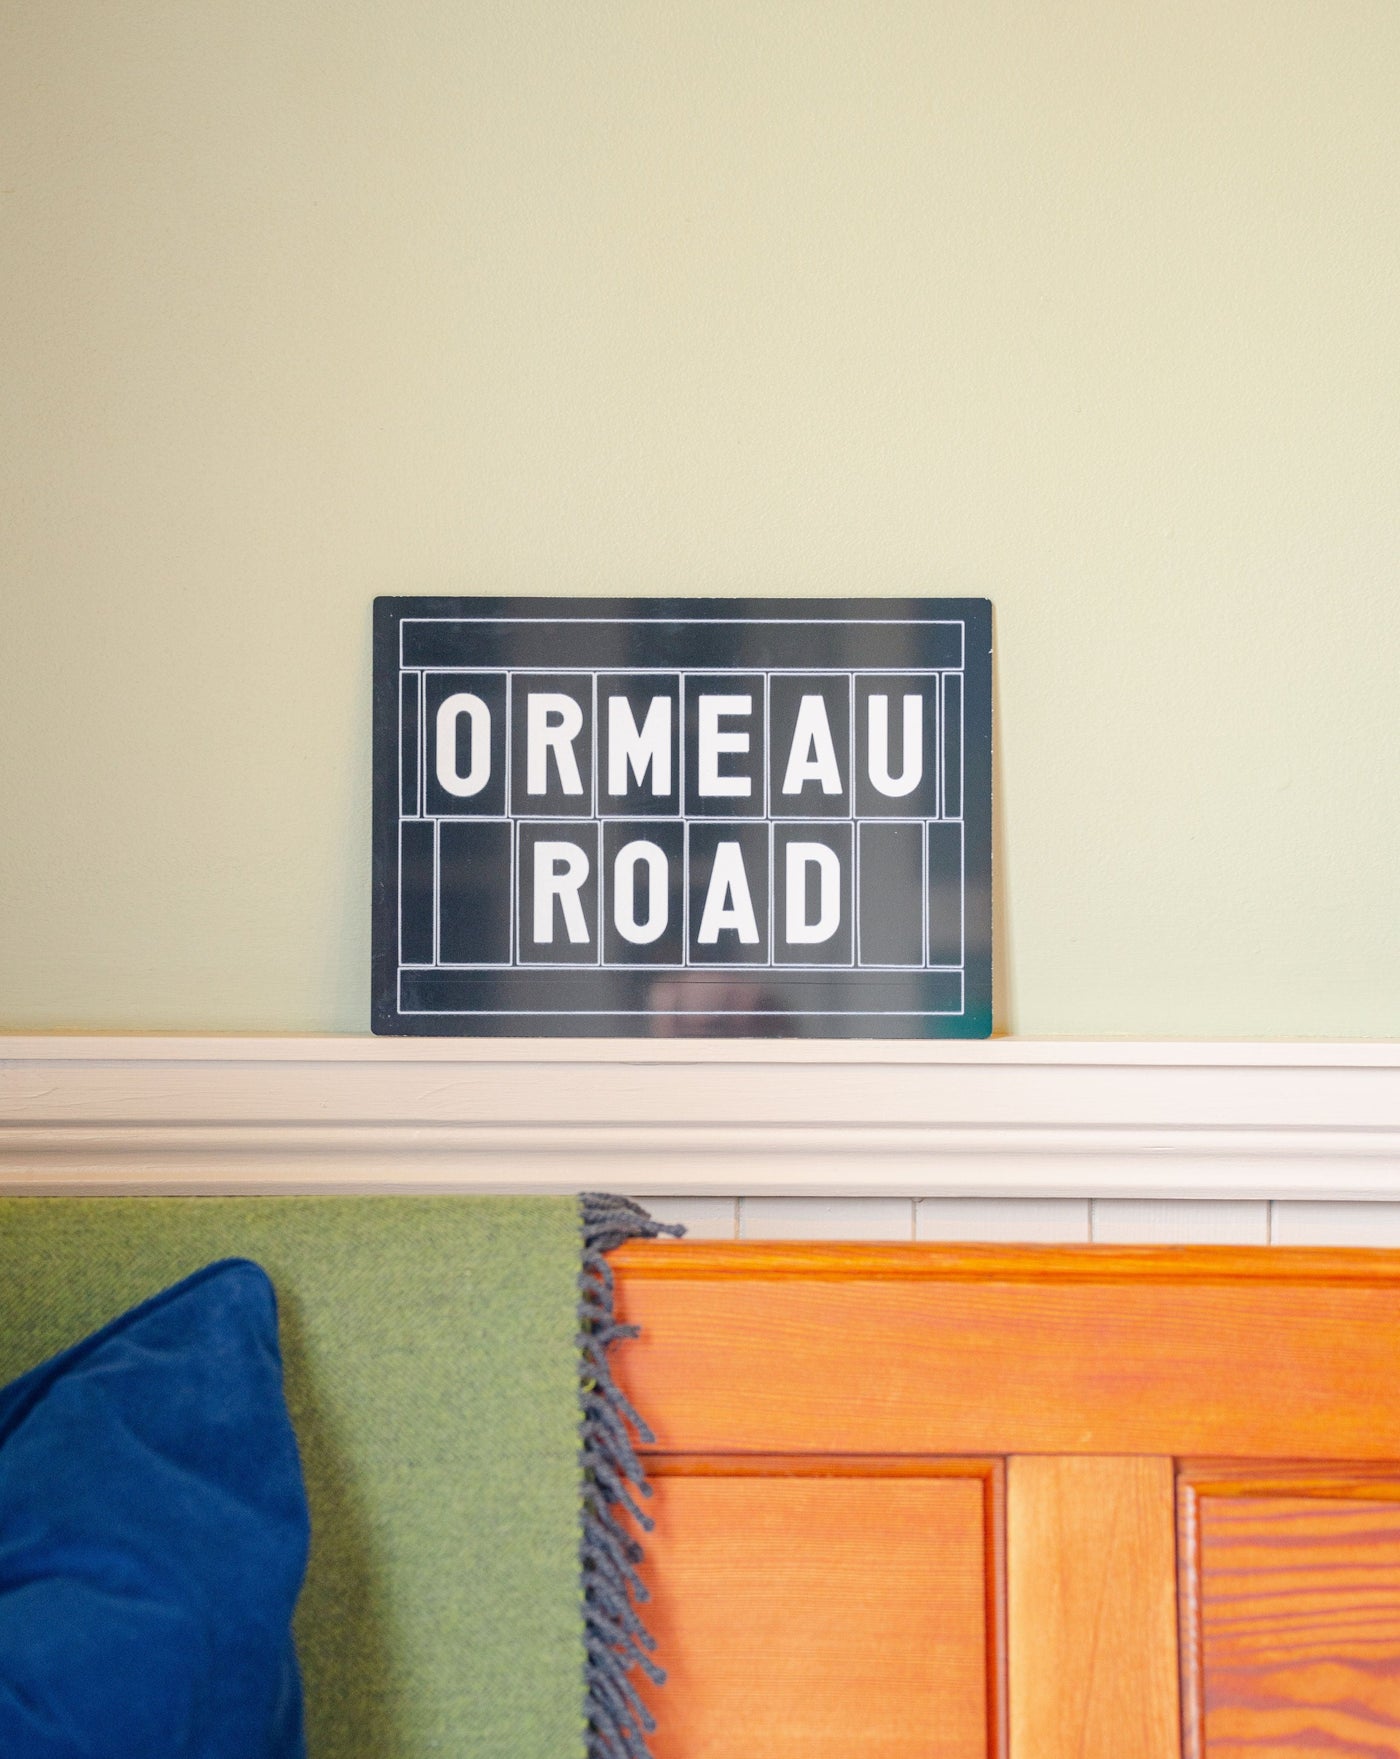 Ormeau Road Street Sign